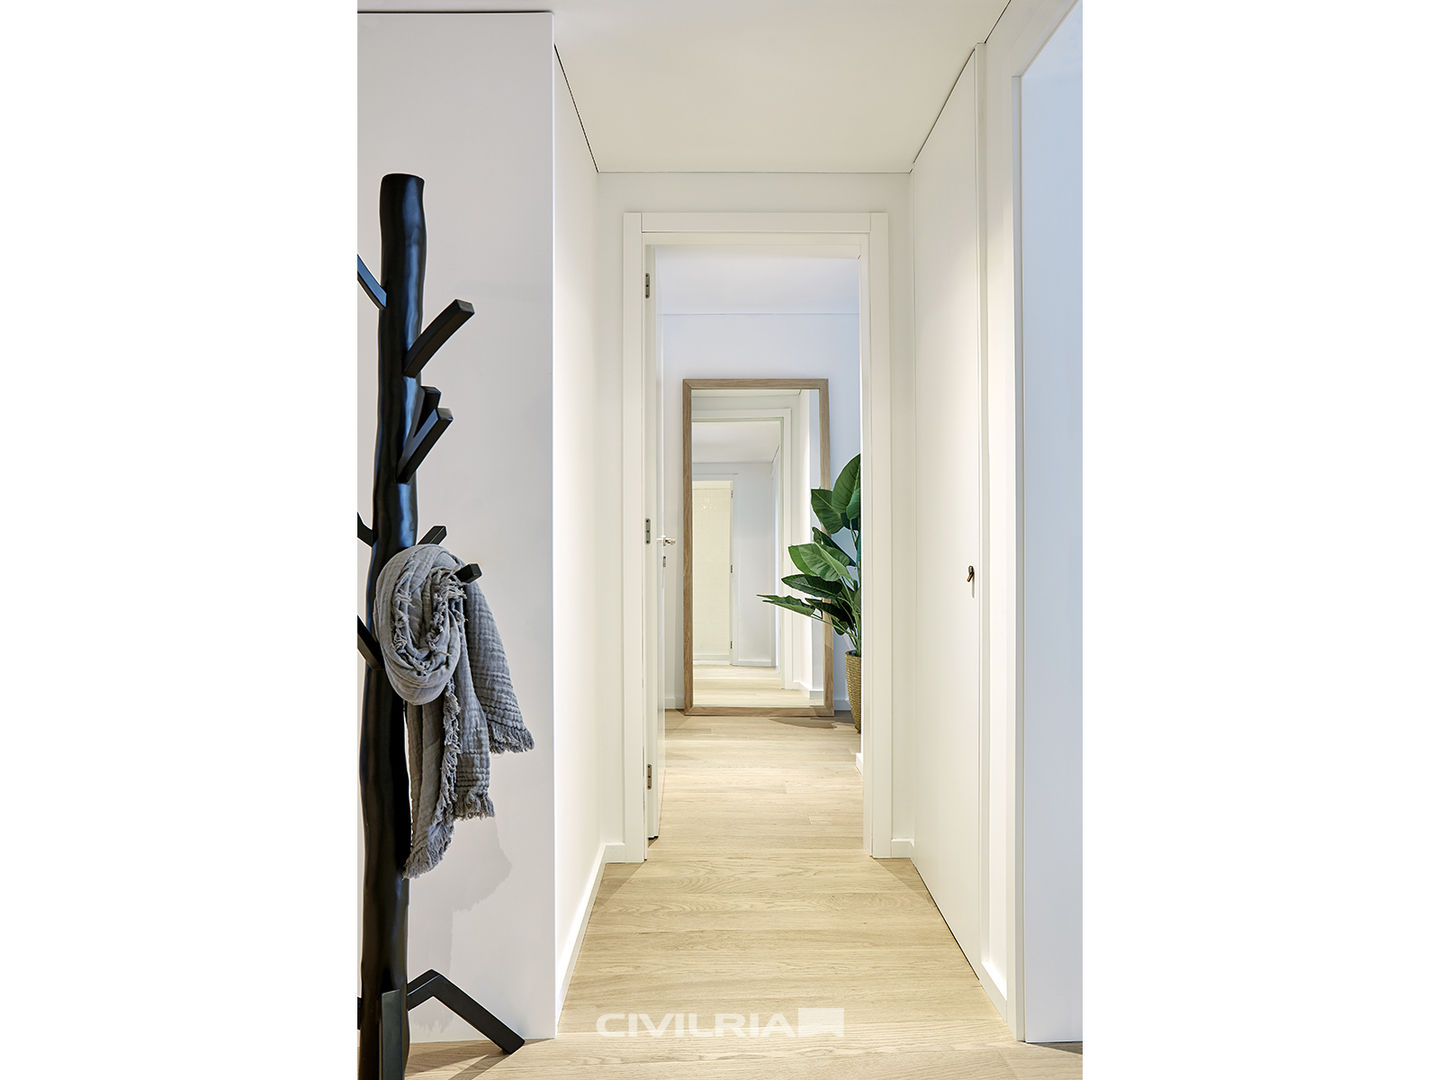 DOCA, CIVILRIA CIVILRIA Modern corridor, hallway & stairs Wood Wood effect